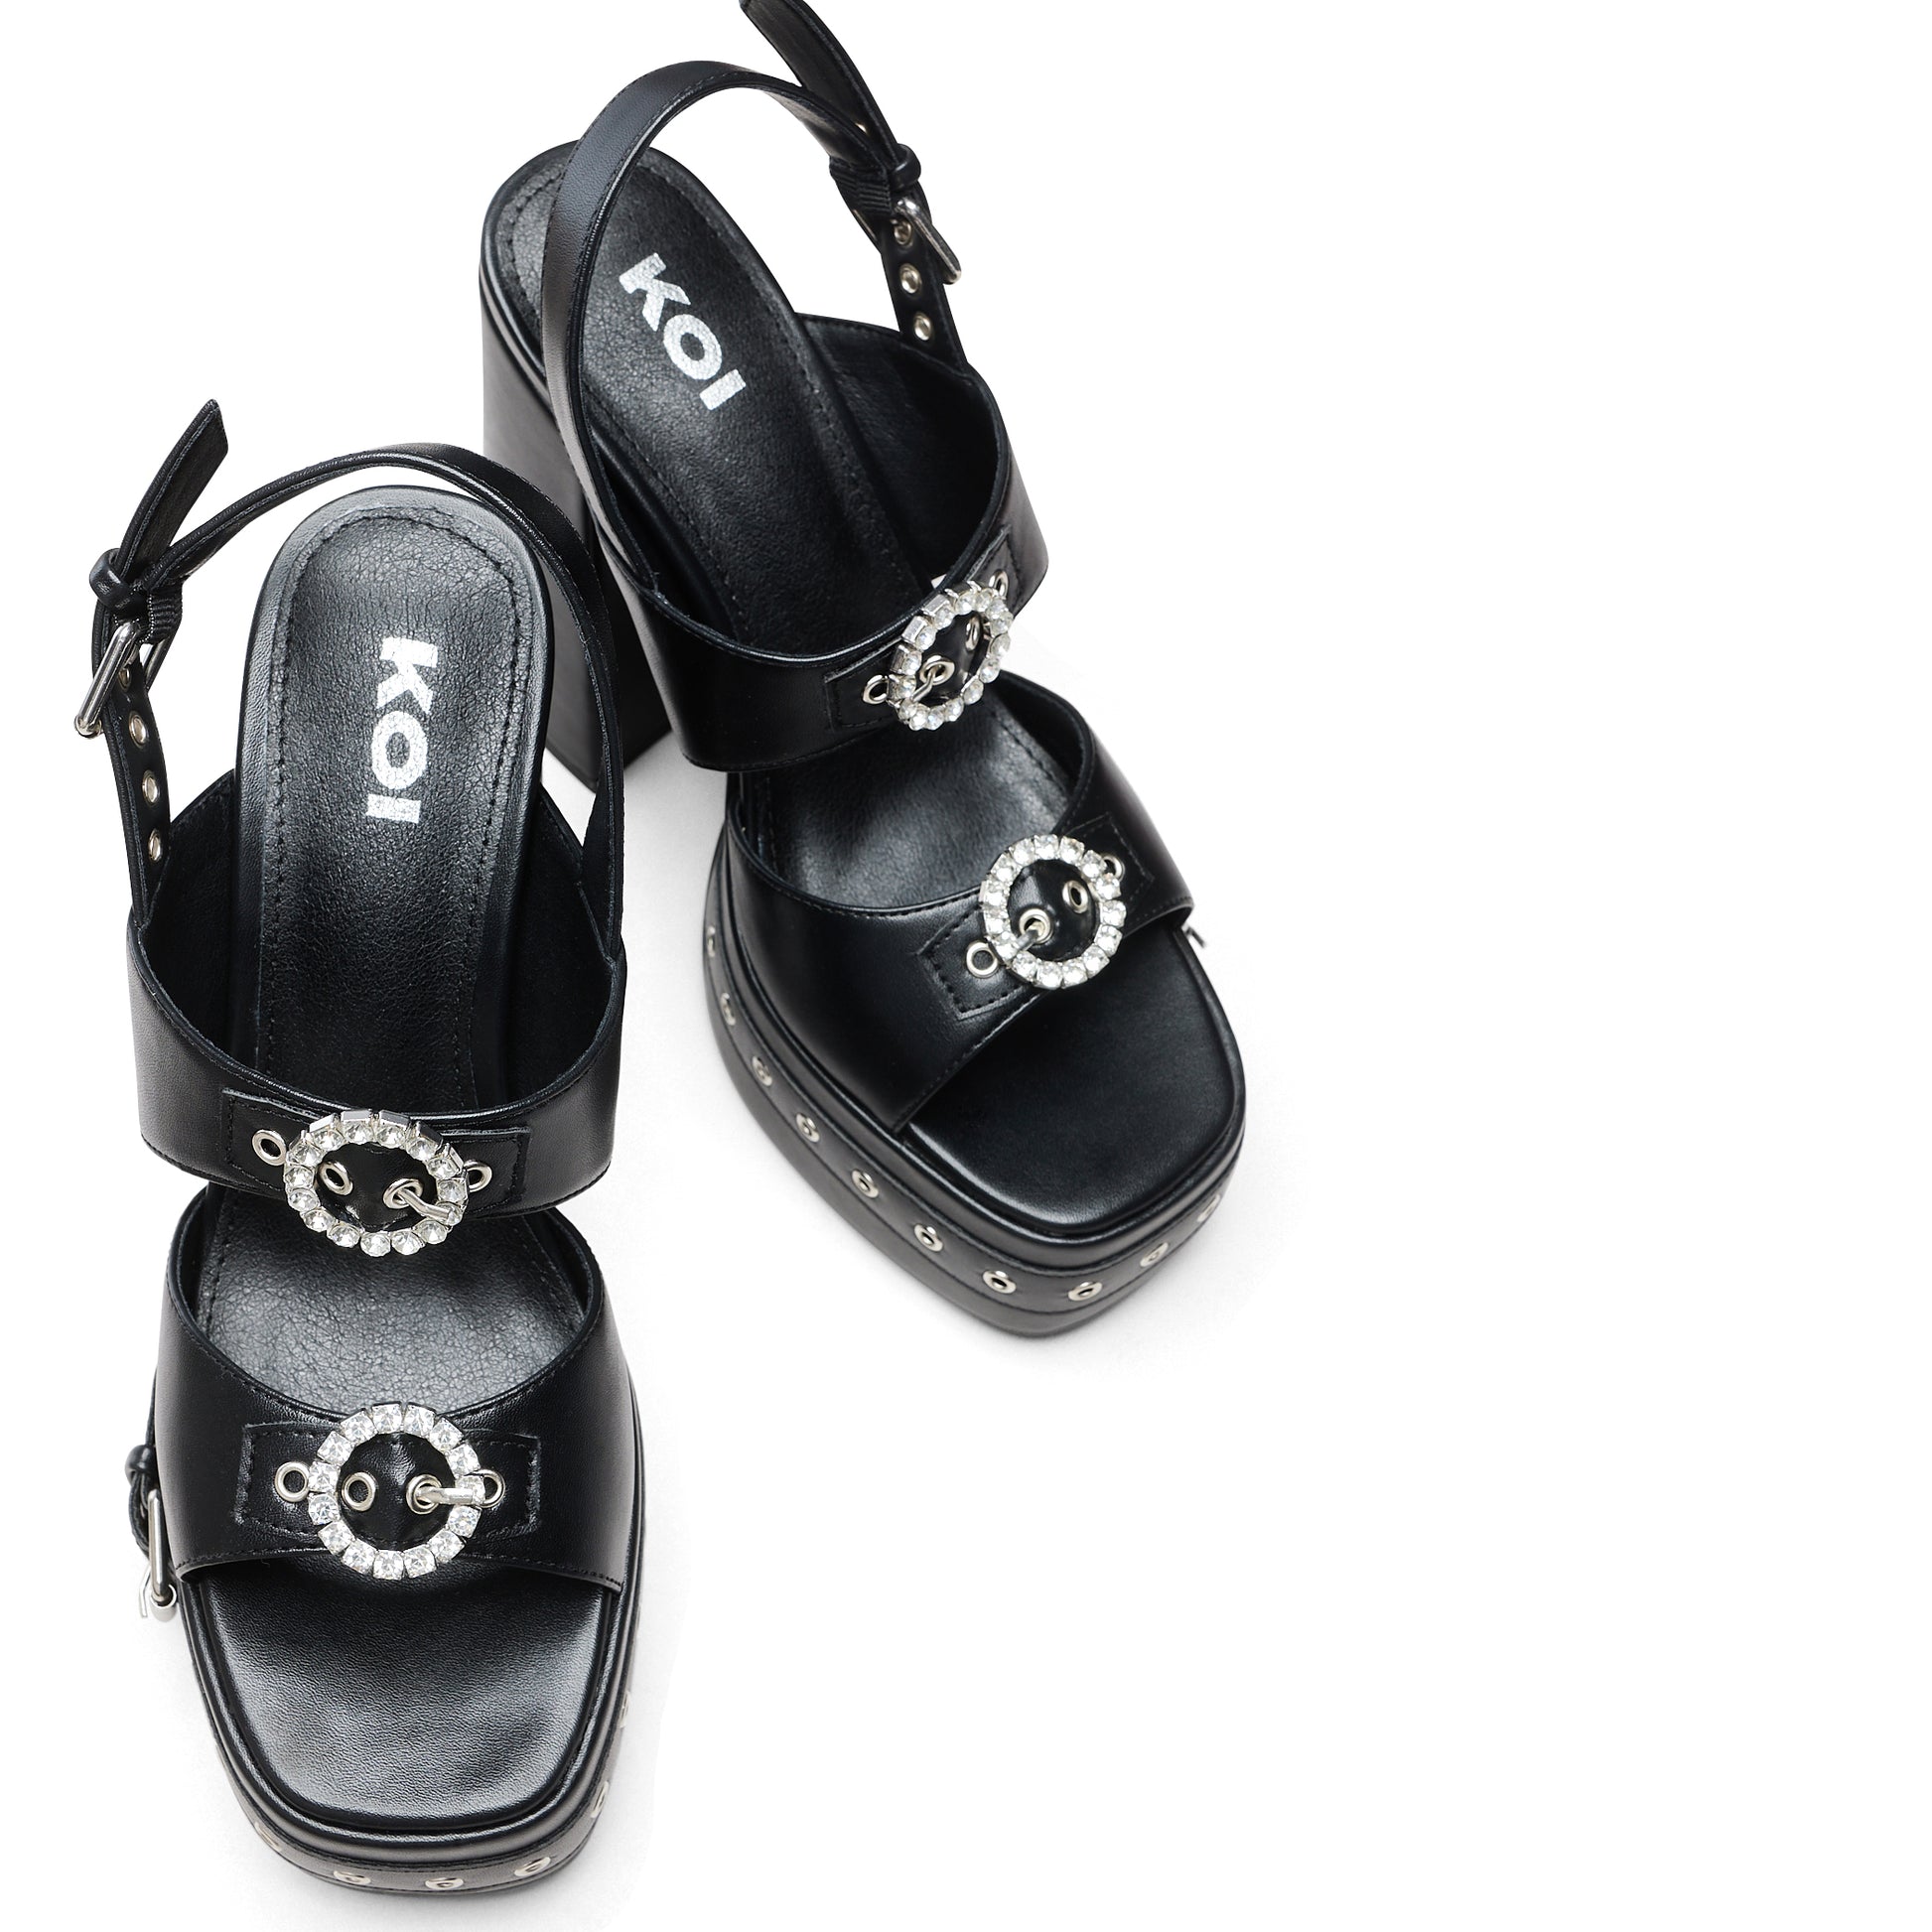 Rotten Minds Buckle Platform Heels - Black - Shoes - KOI Footwear - Black - Top View